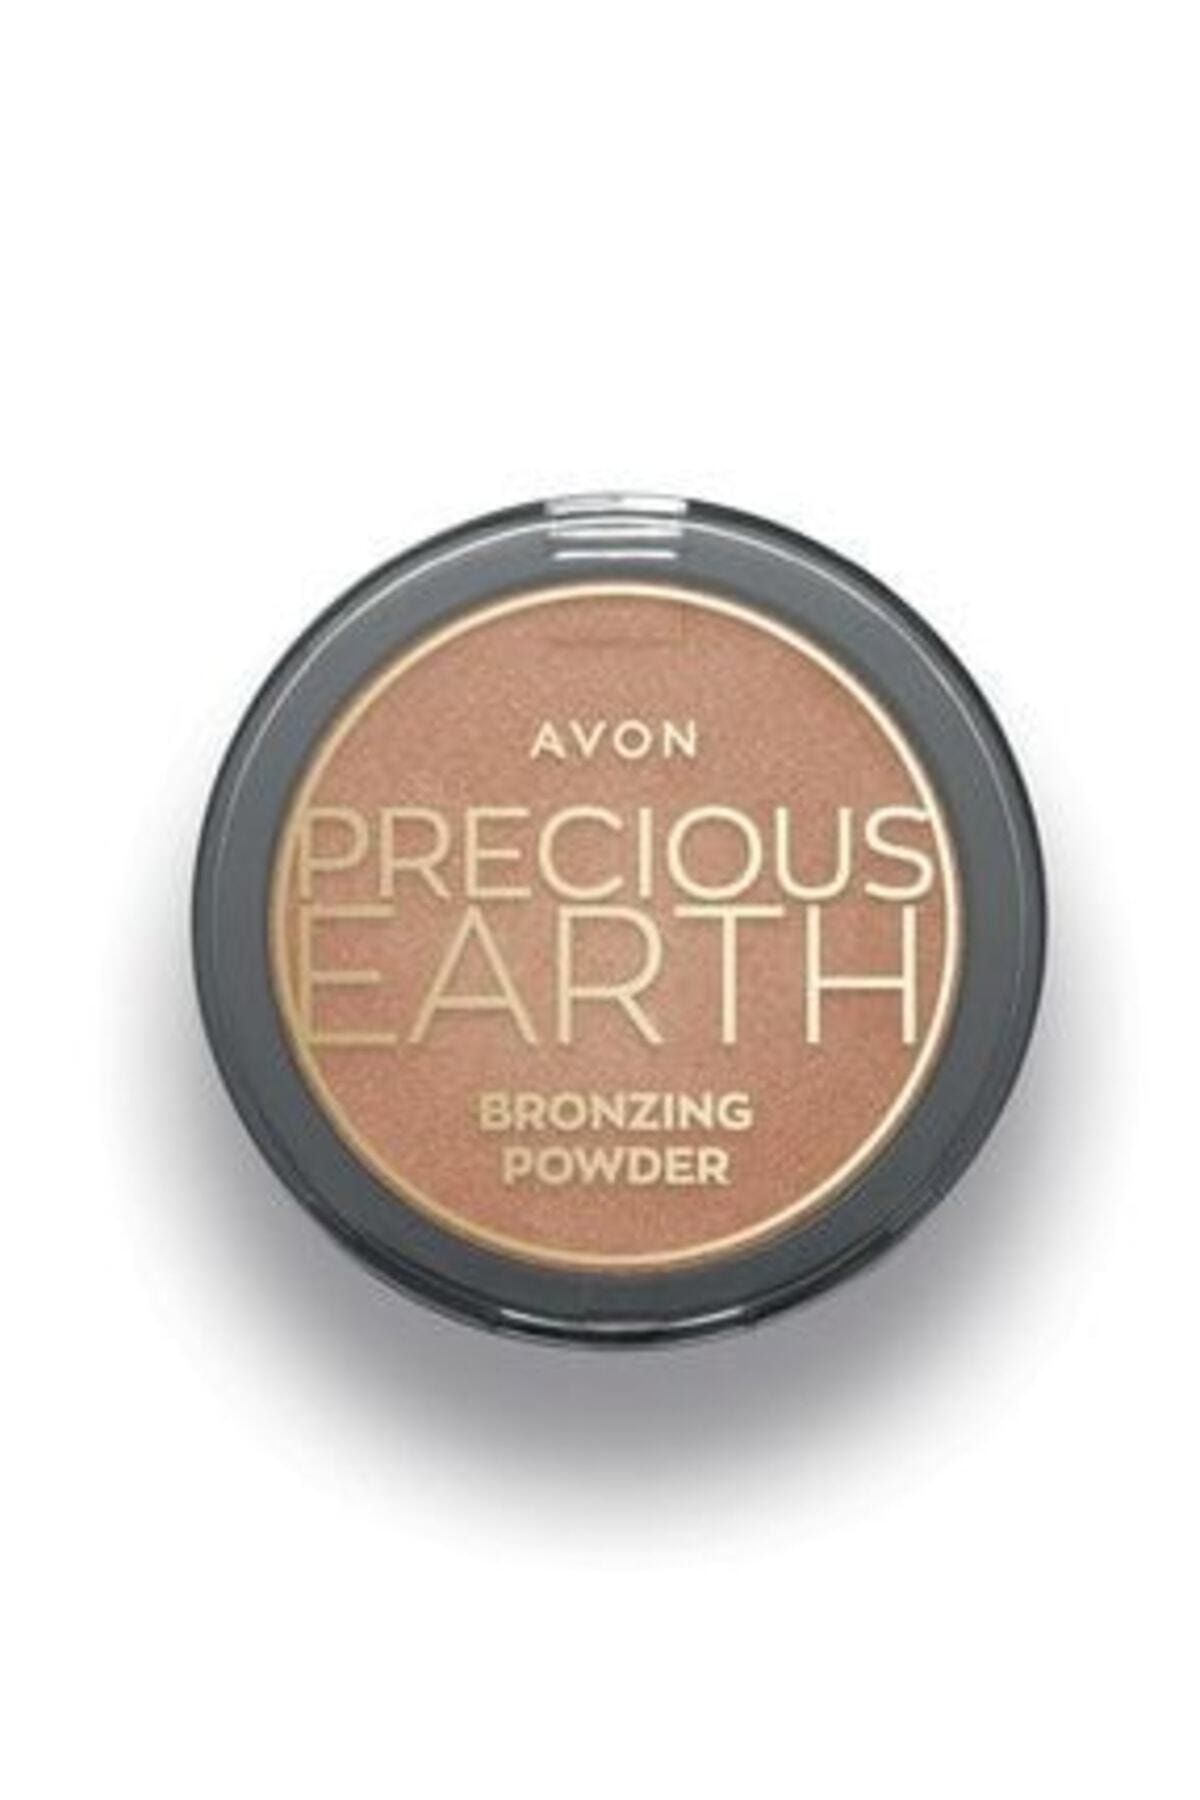 Avon Precious Earth Bronzing Powder.